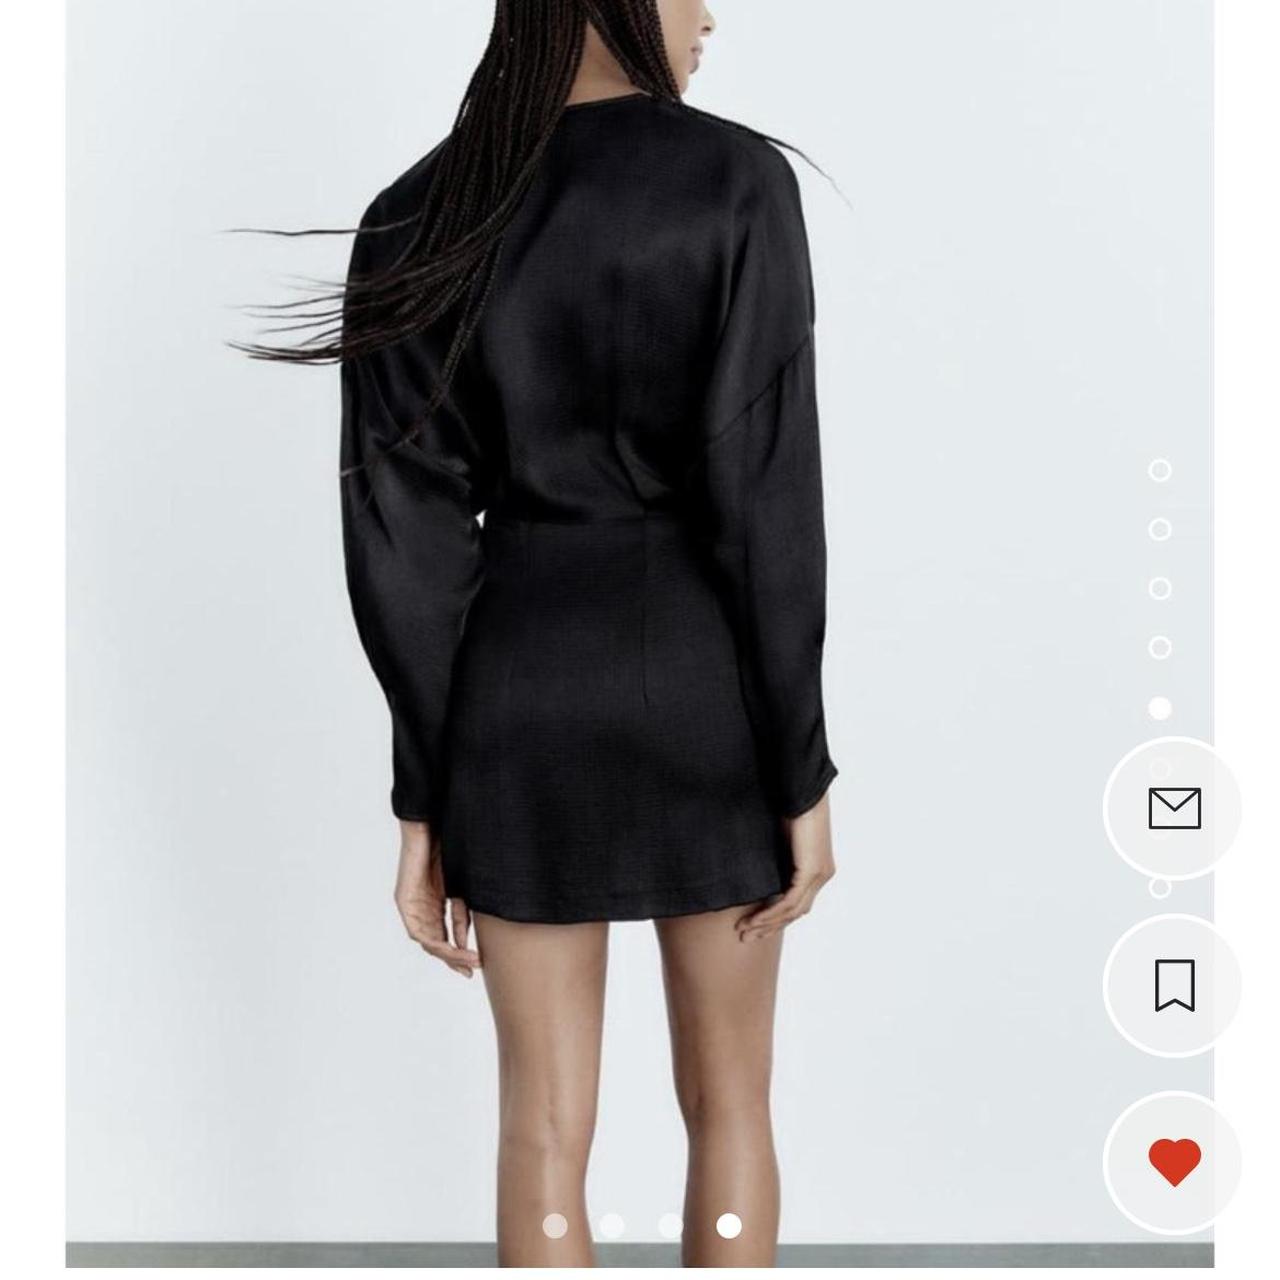 Zara Women's Black Dress | Depop